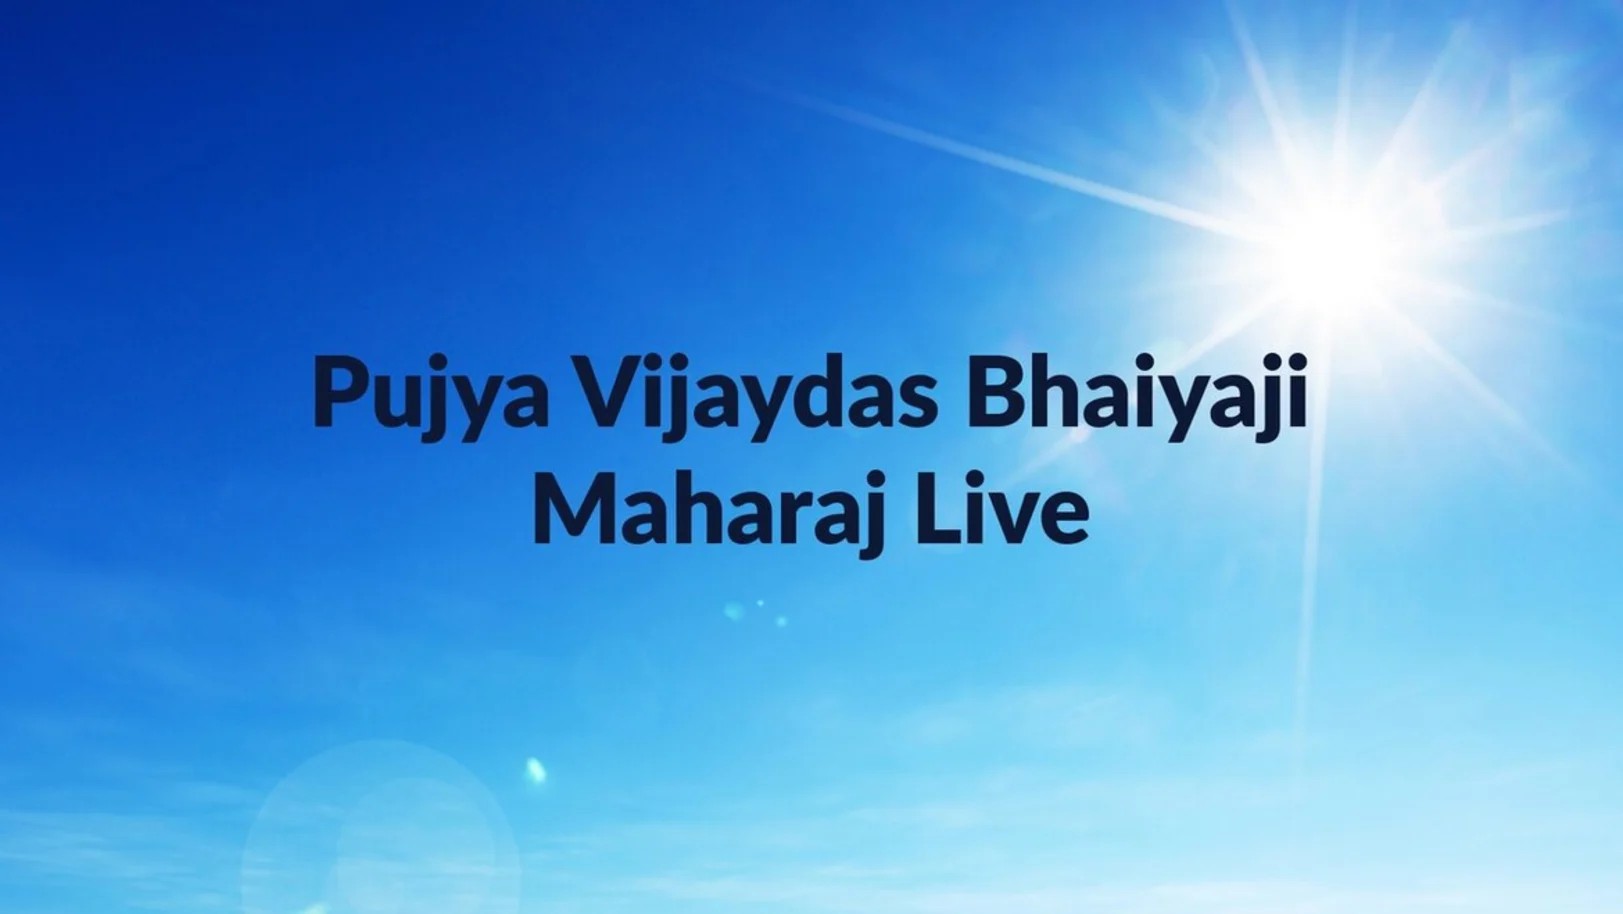 Pujya Vijaydas Bhaiyaji Maharaj Live Streaming Now On Dharm Sandesh